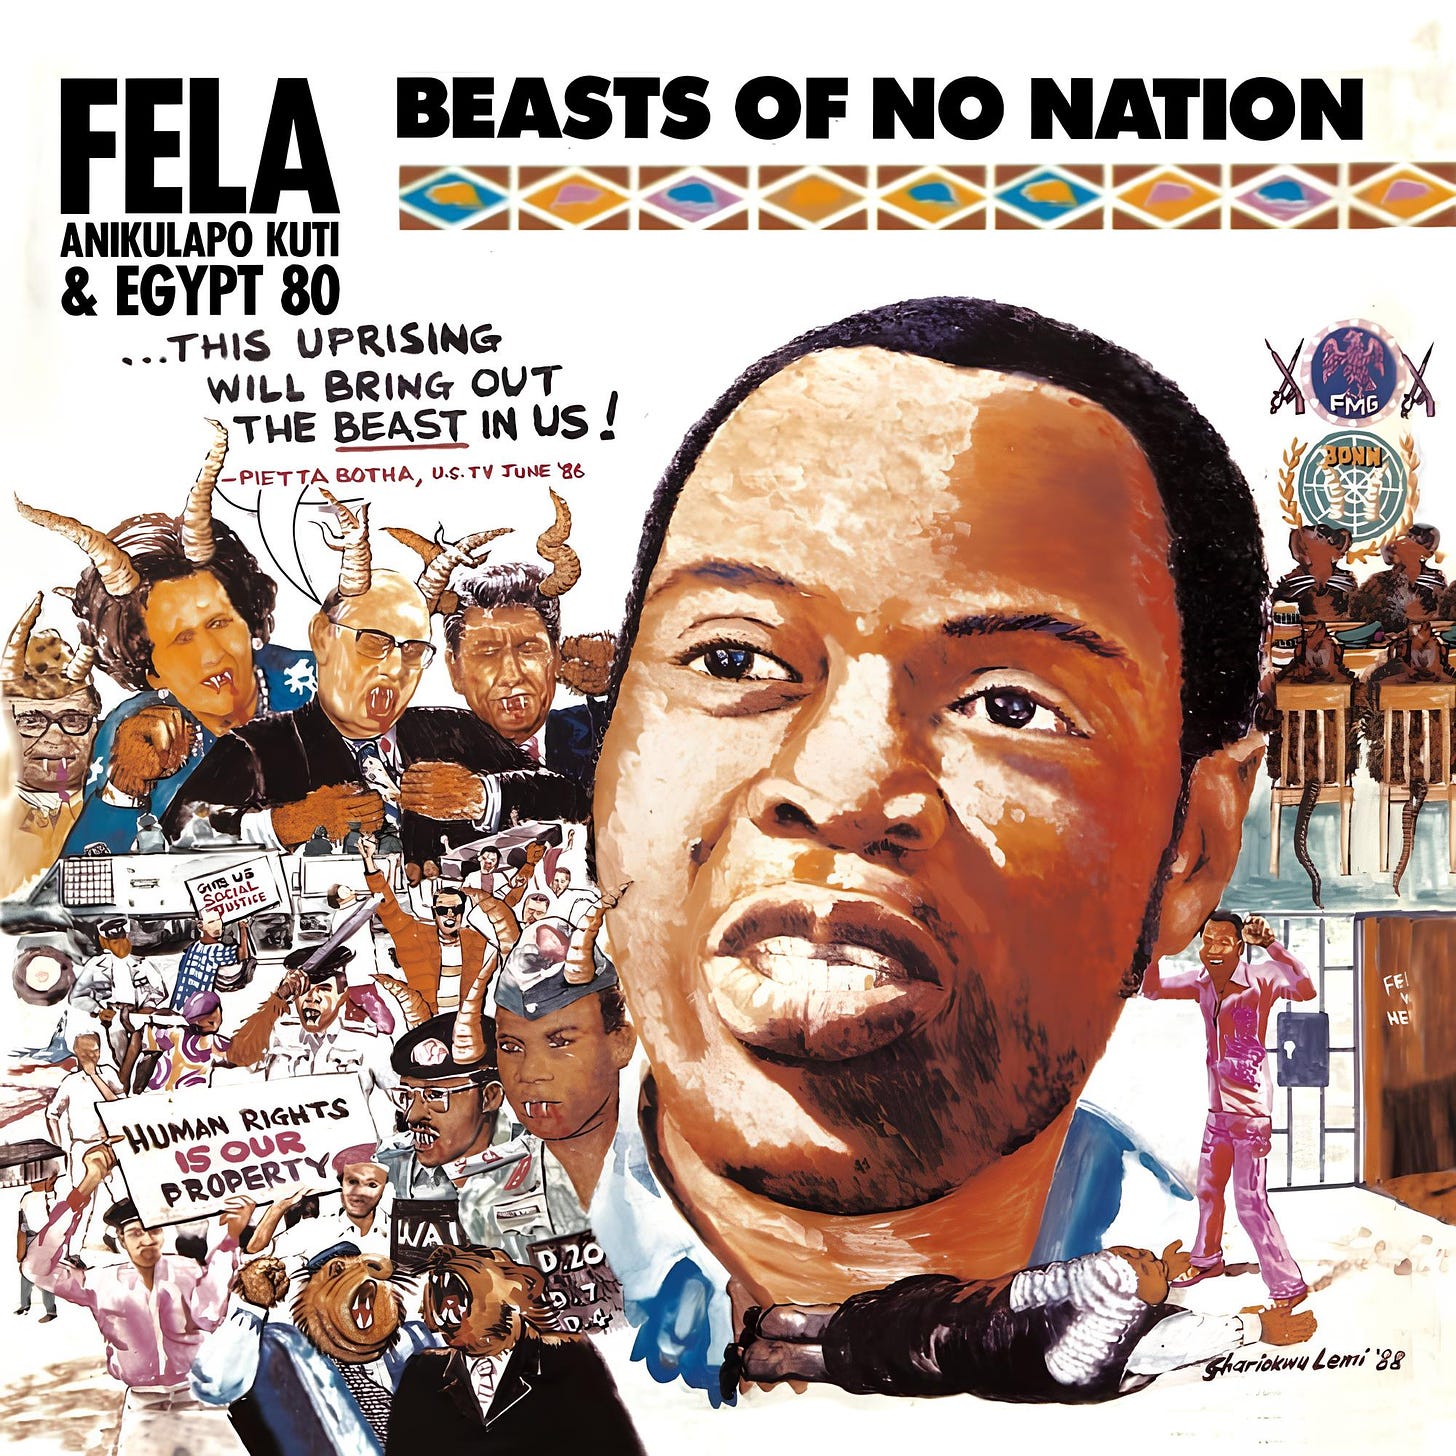 Lemi Ghariokwu cover art design for Fela Anikulapo Kuti & Egypt 80 band's 1989 'Beast of No Nation' album